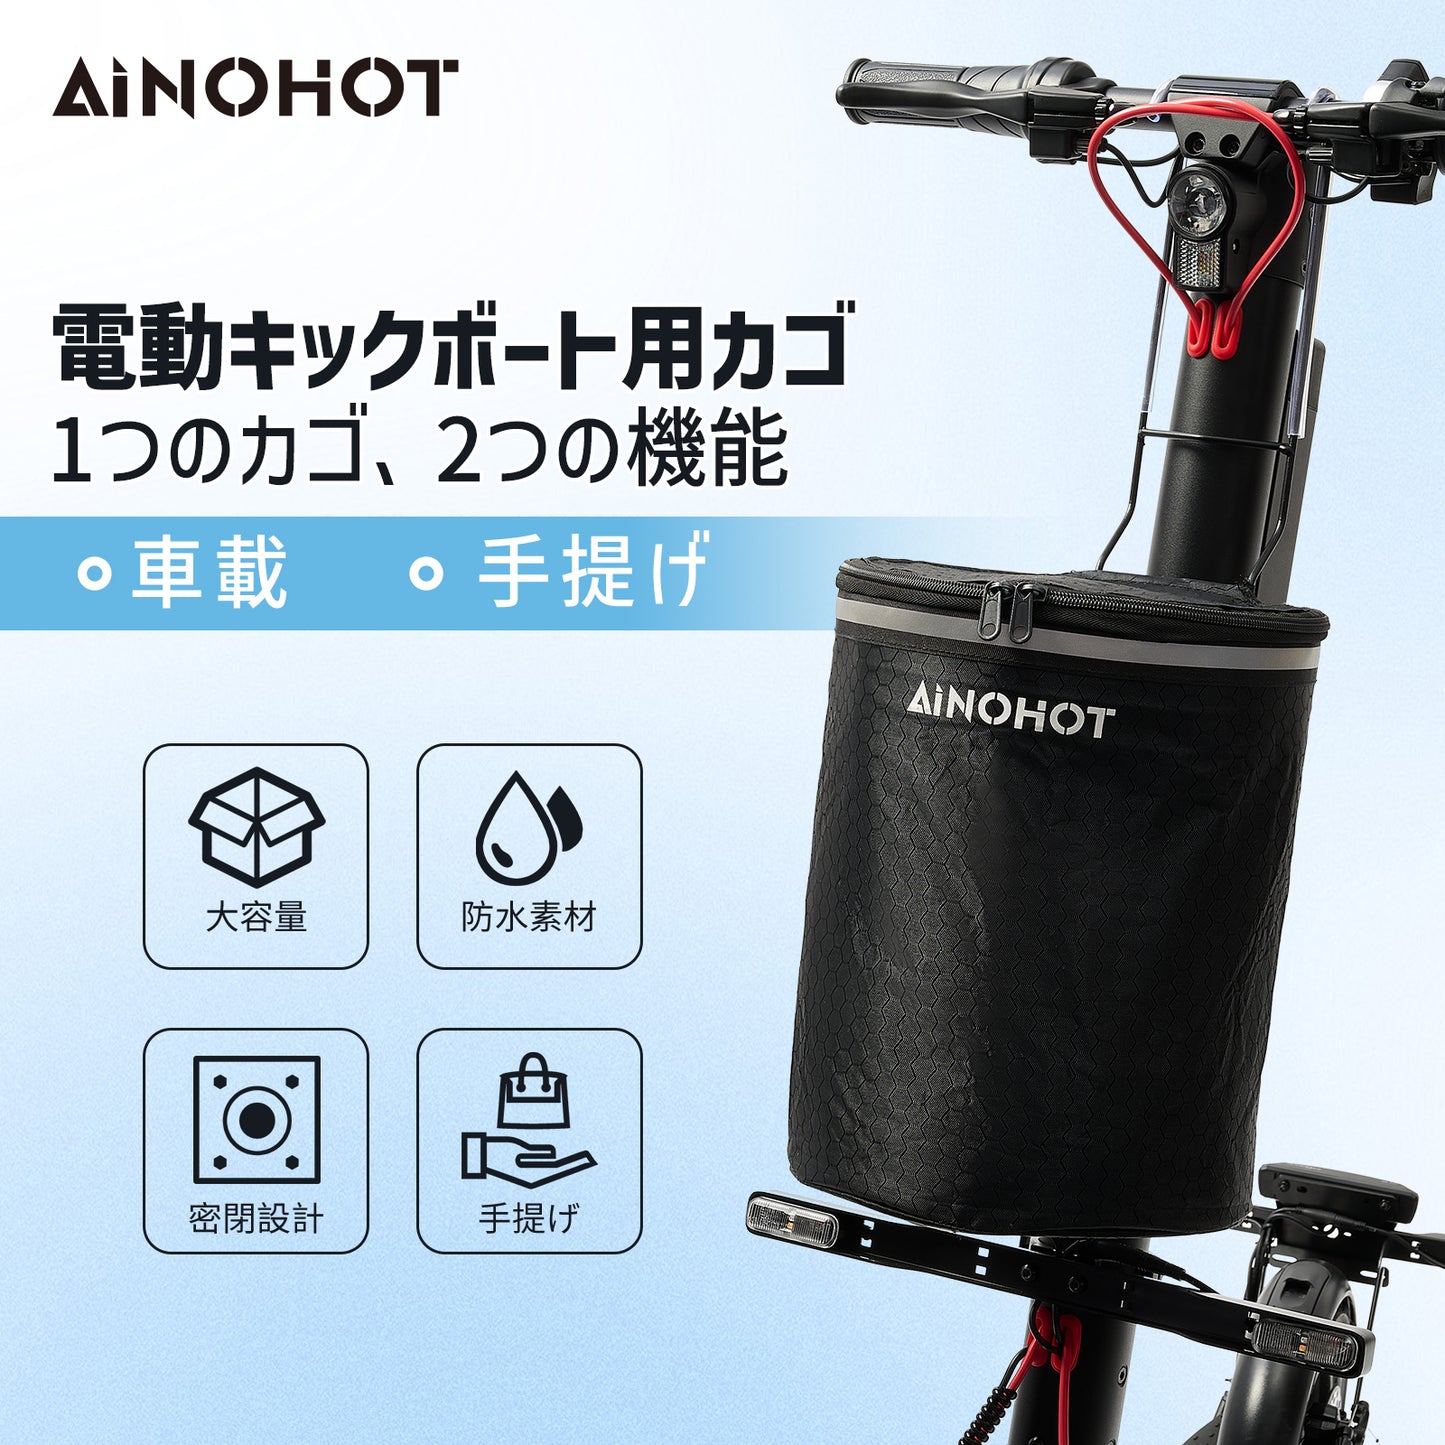 AINOHOT 電動キックボート用カゴ 前かご バスケット 自転車カゴカバー